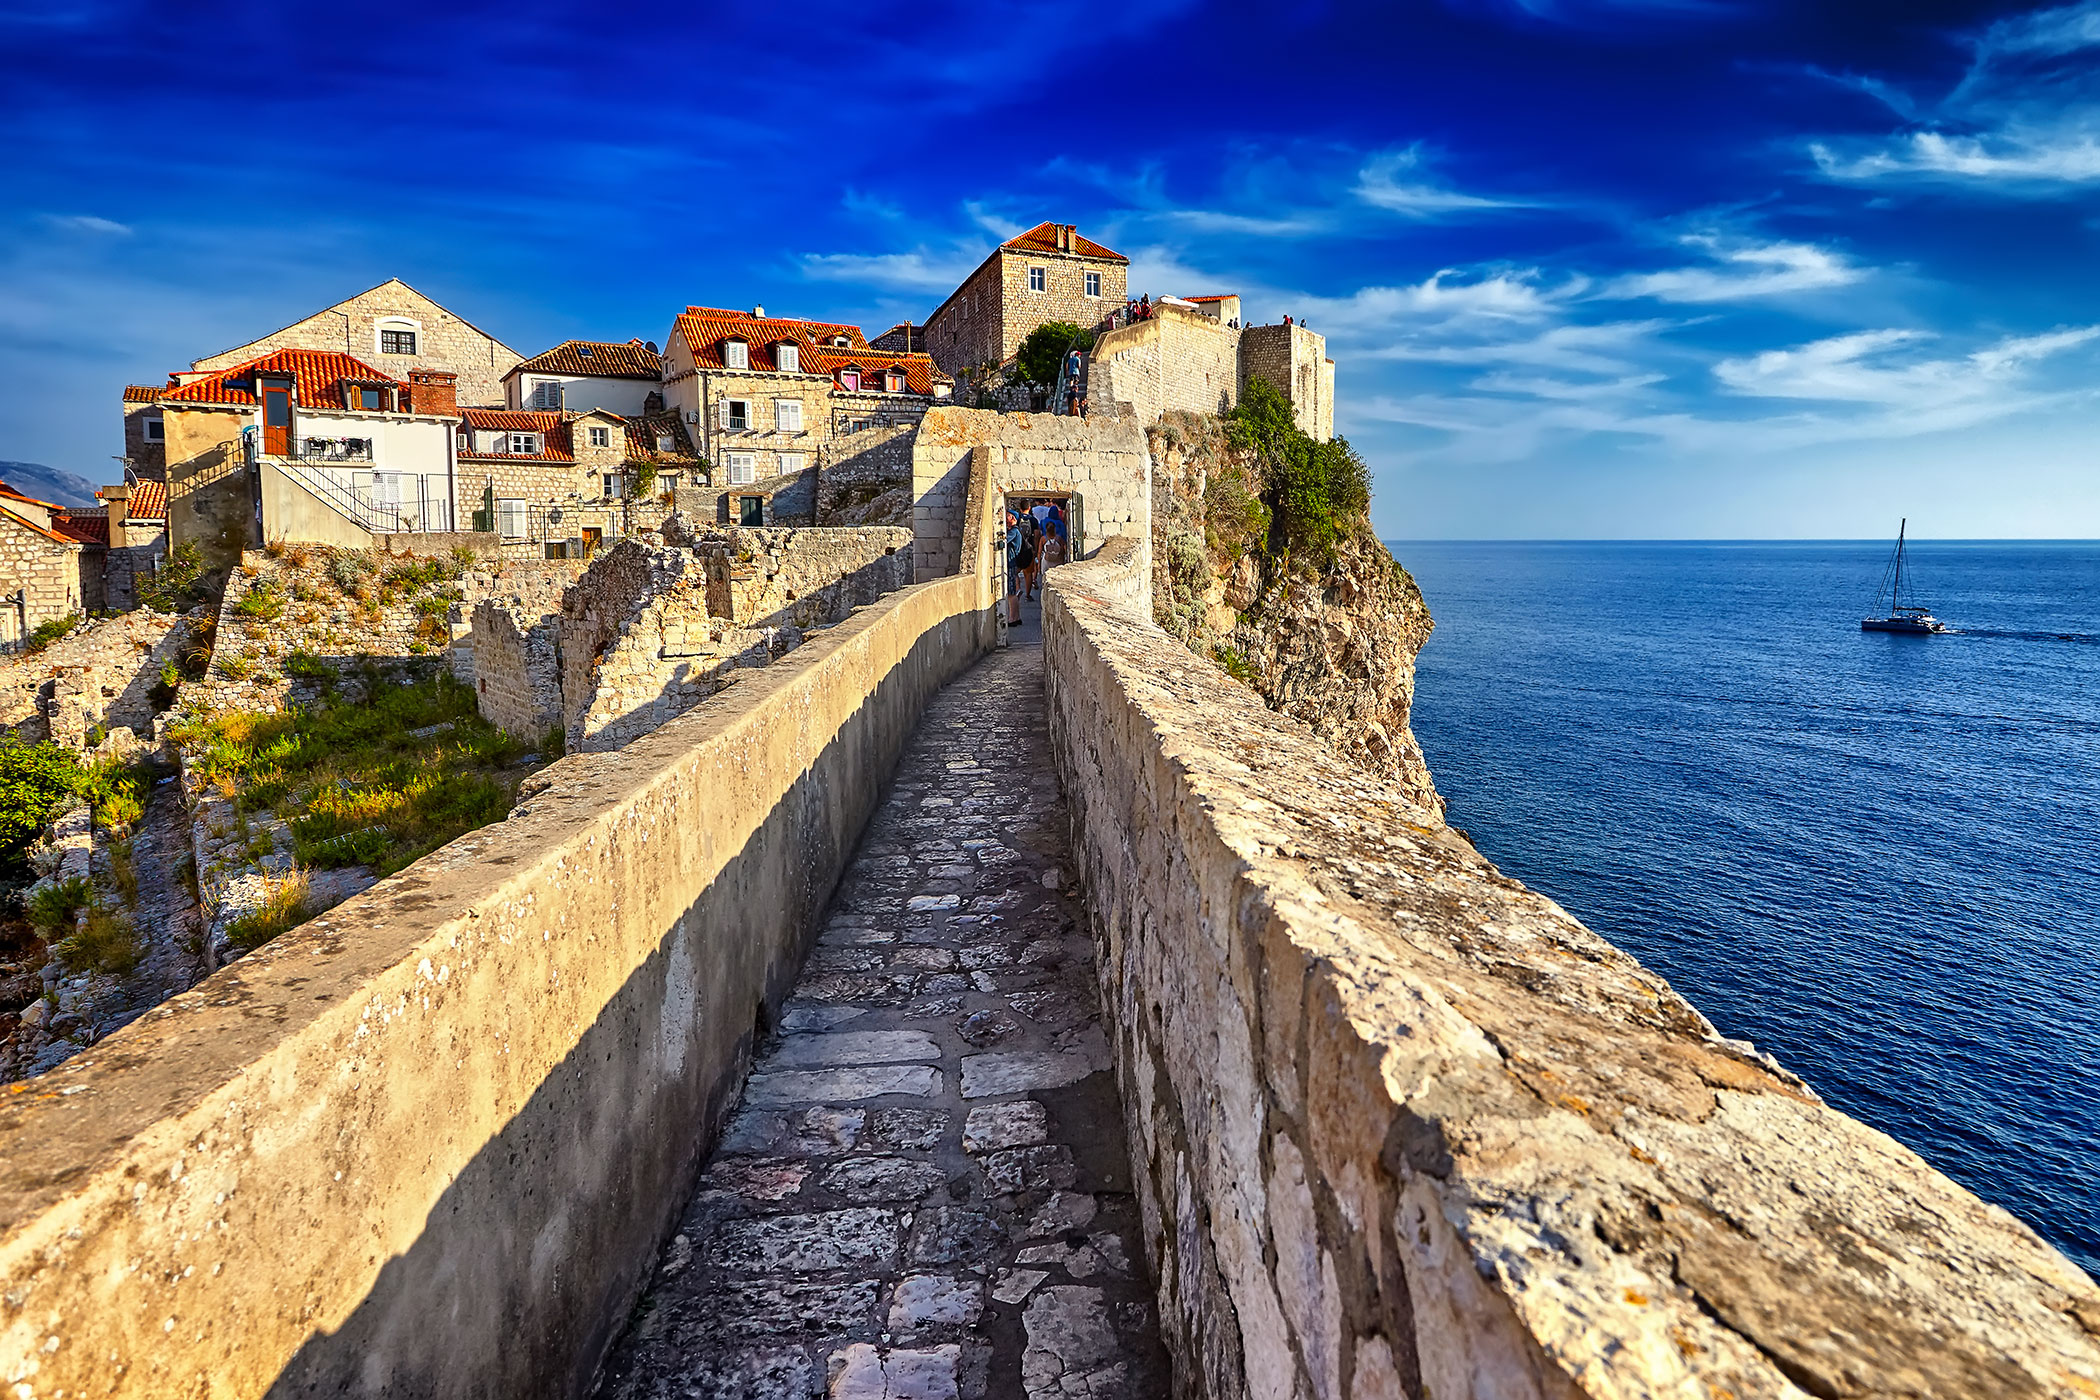 Must visit Game of Thrones filming locations in Dubrovnik